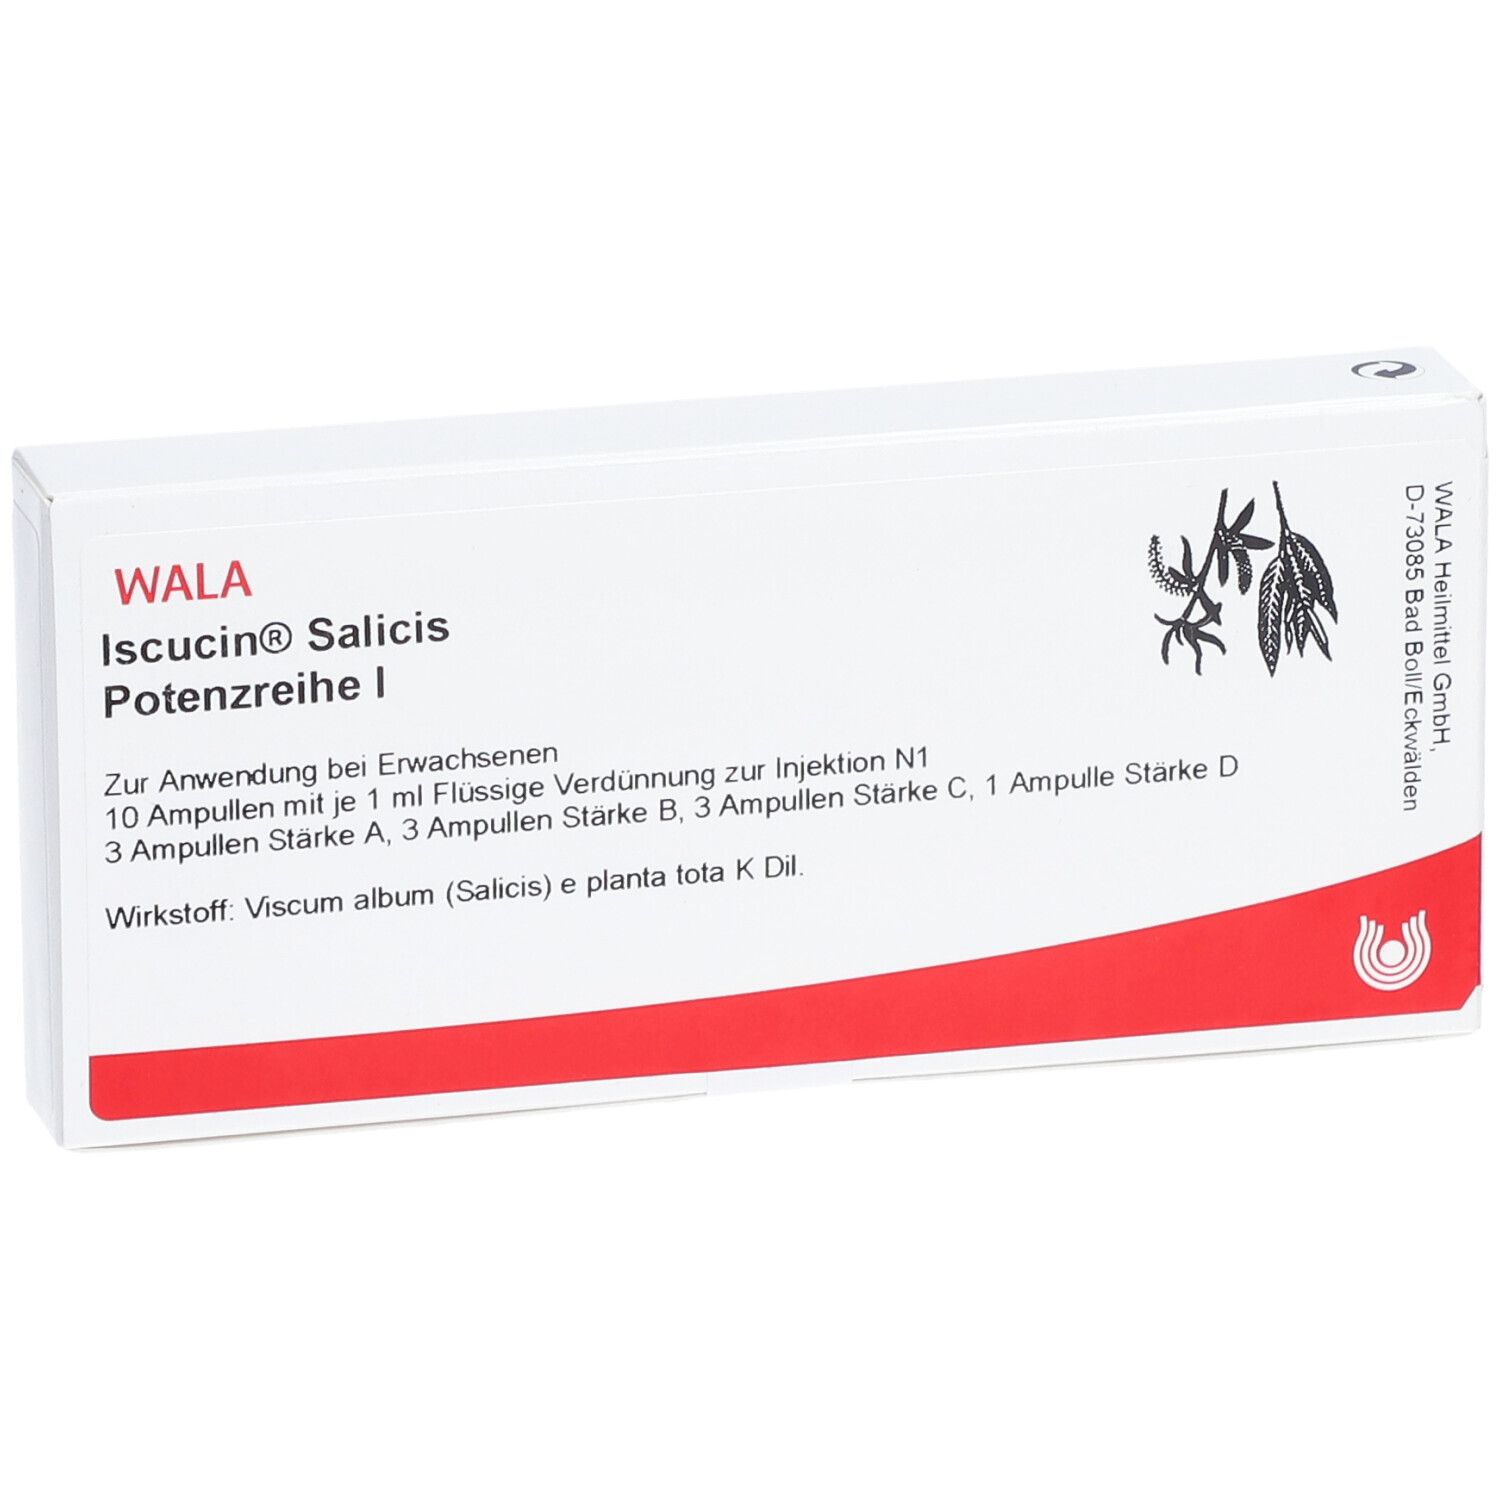 WALA® Iscucin Salicis Potenzreihe I Amp.